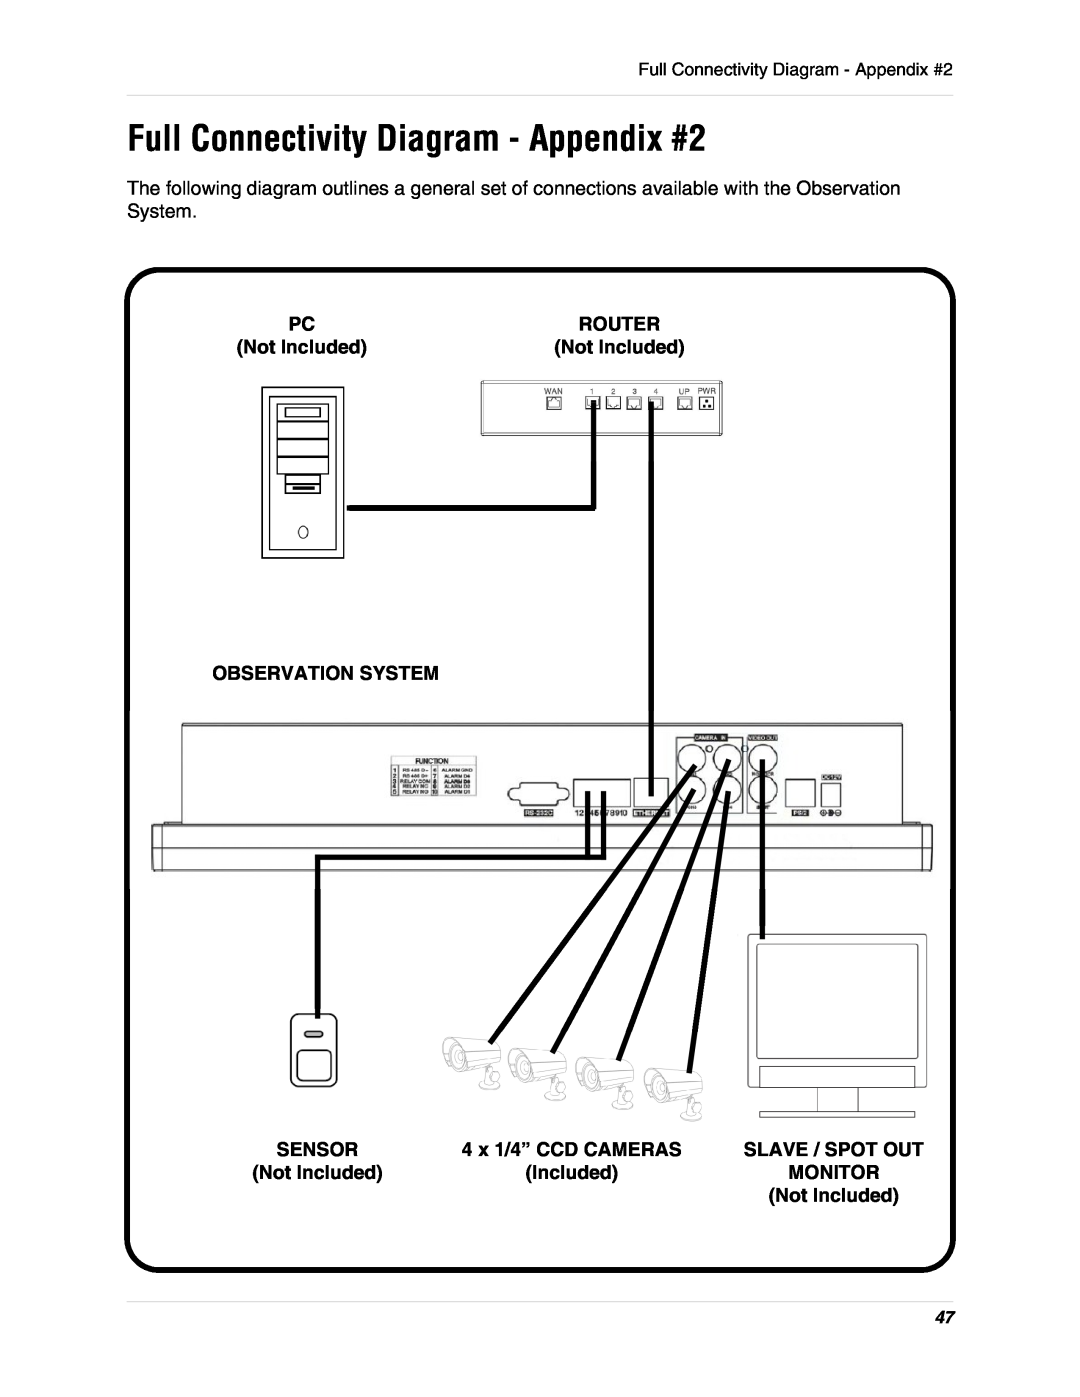 LOREX Technology L15D400 Full Connectivity Diagram - Appendix #2, Observation System, 4 x 1/4” CCD CAMERAS, Router, Sensor 